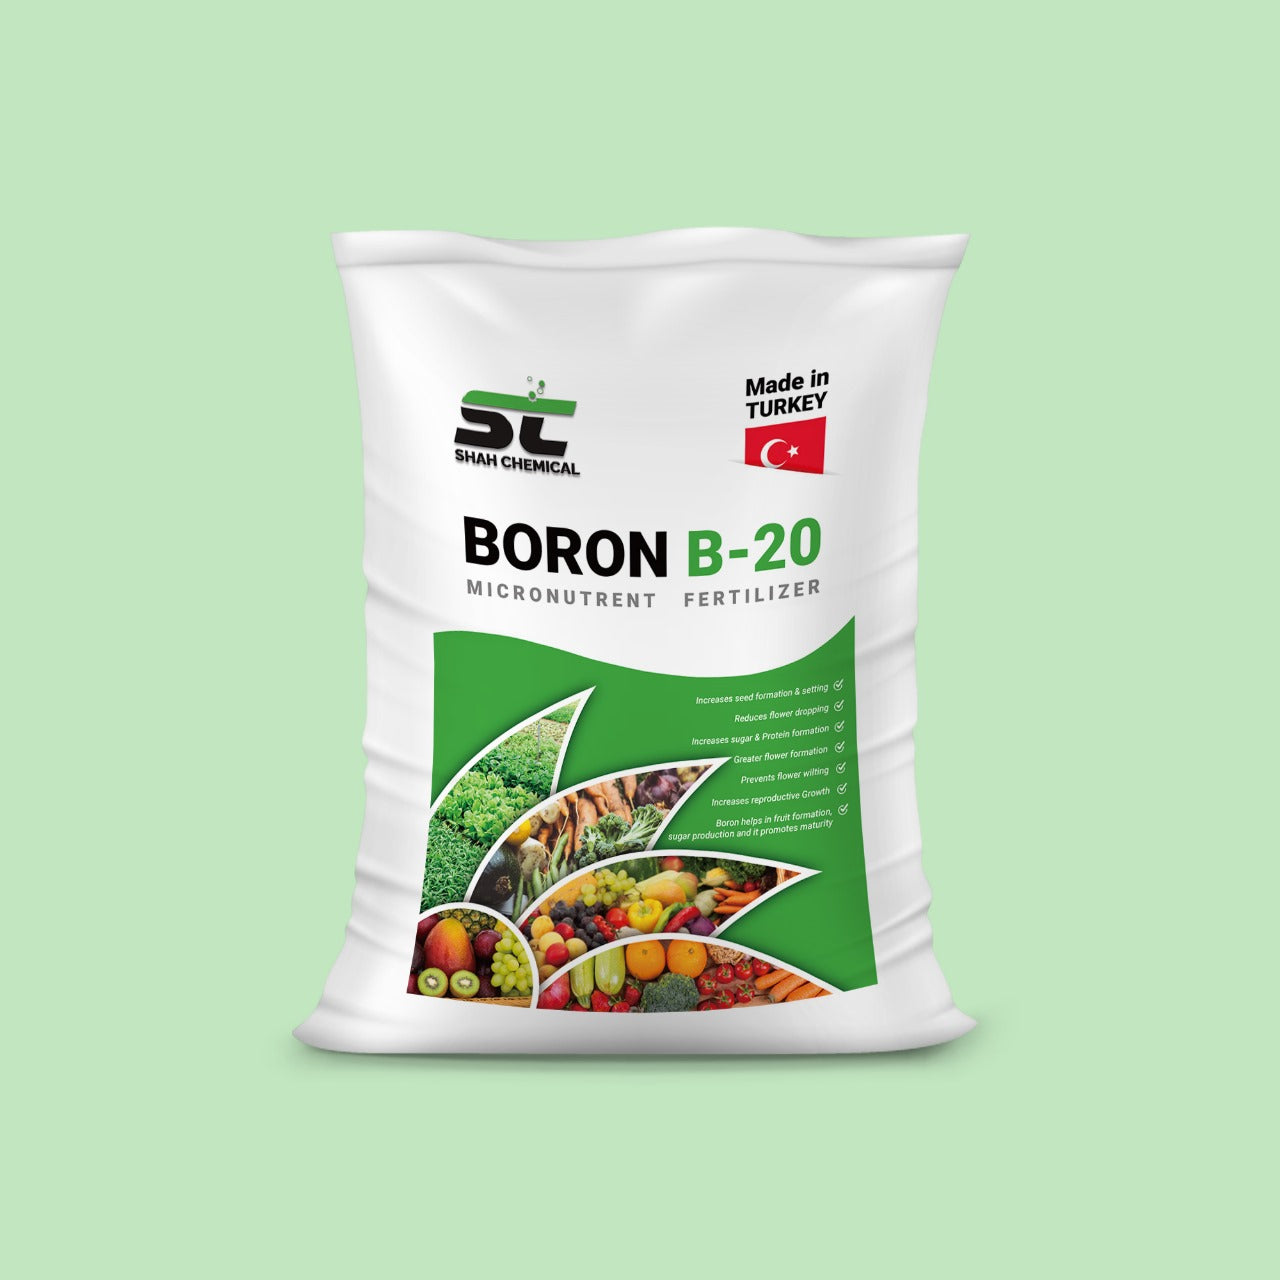 BORON B-20 Micronutrent Fertilizer - 25 kg bag MADE IN TURKEY